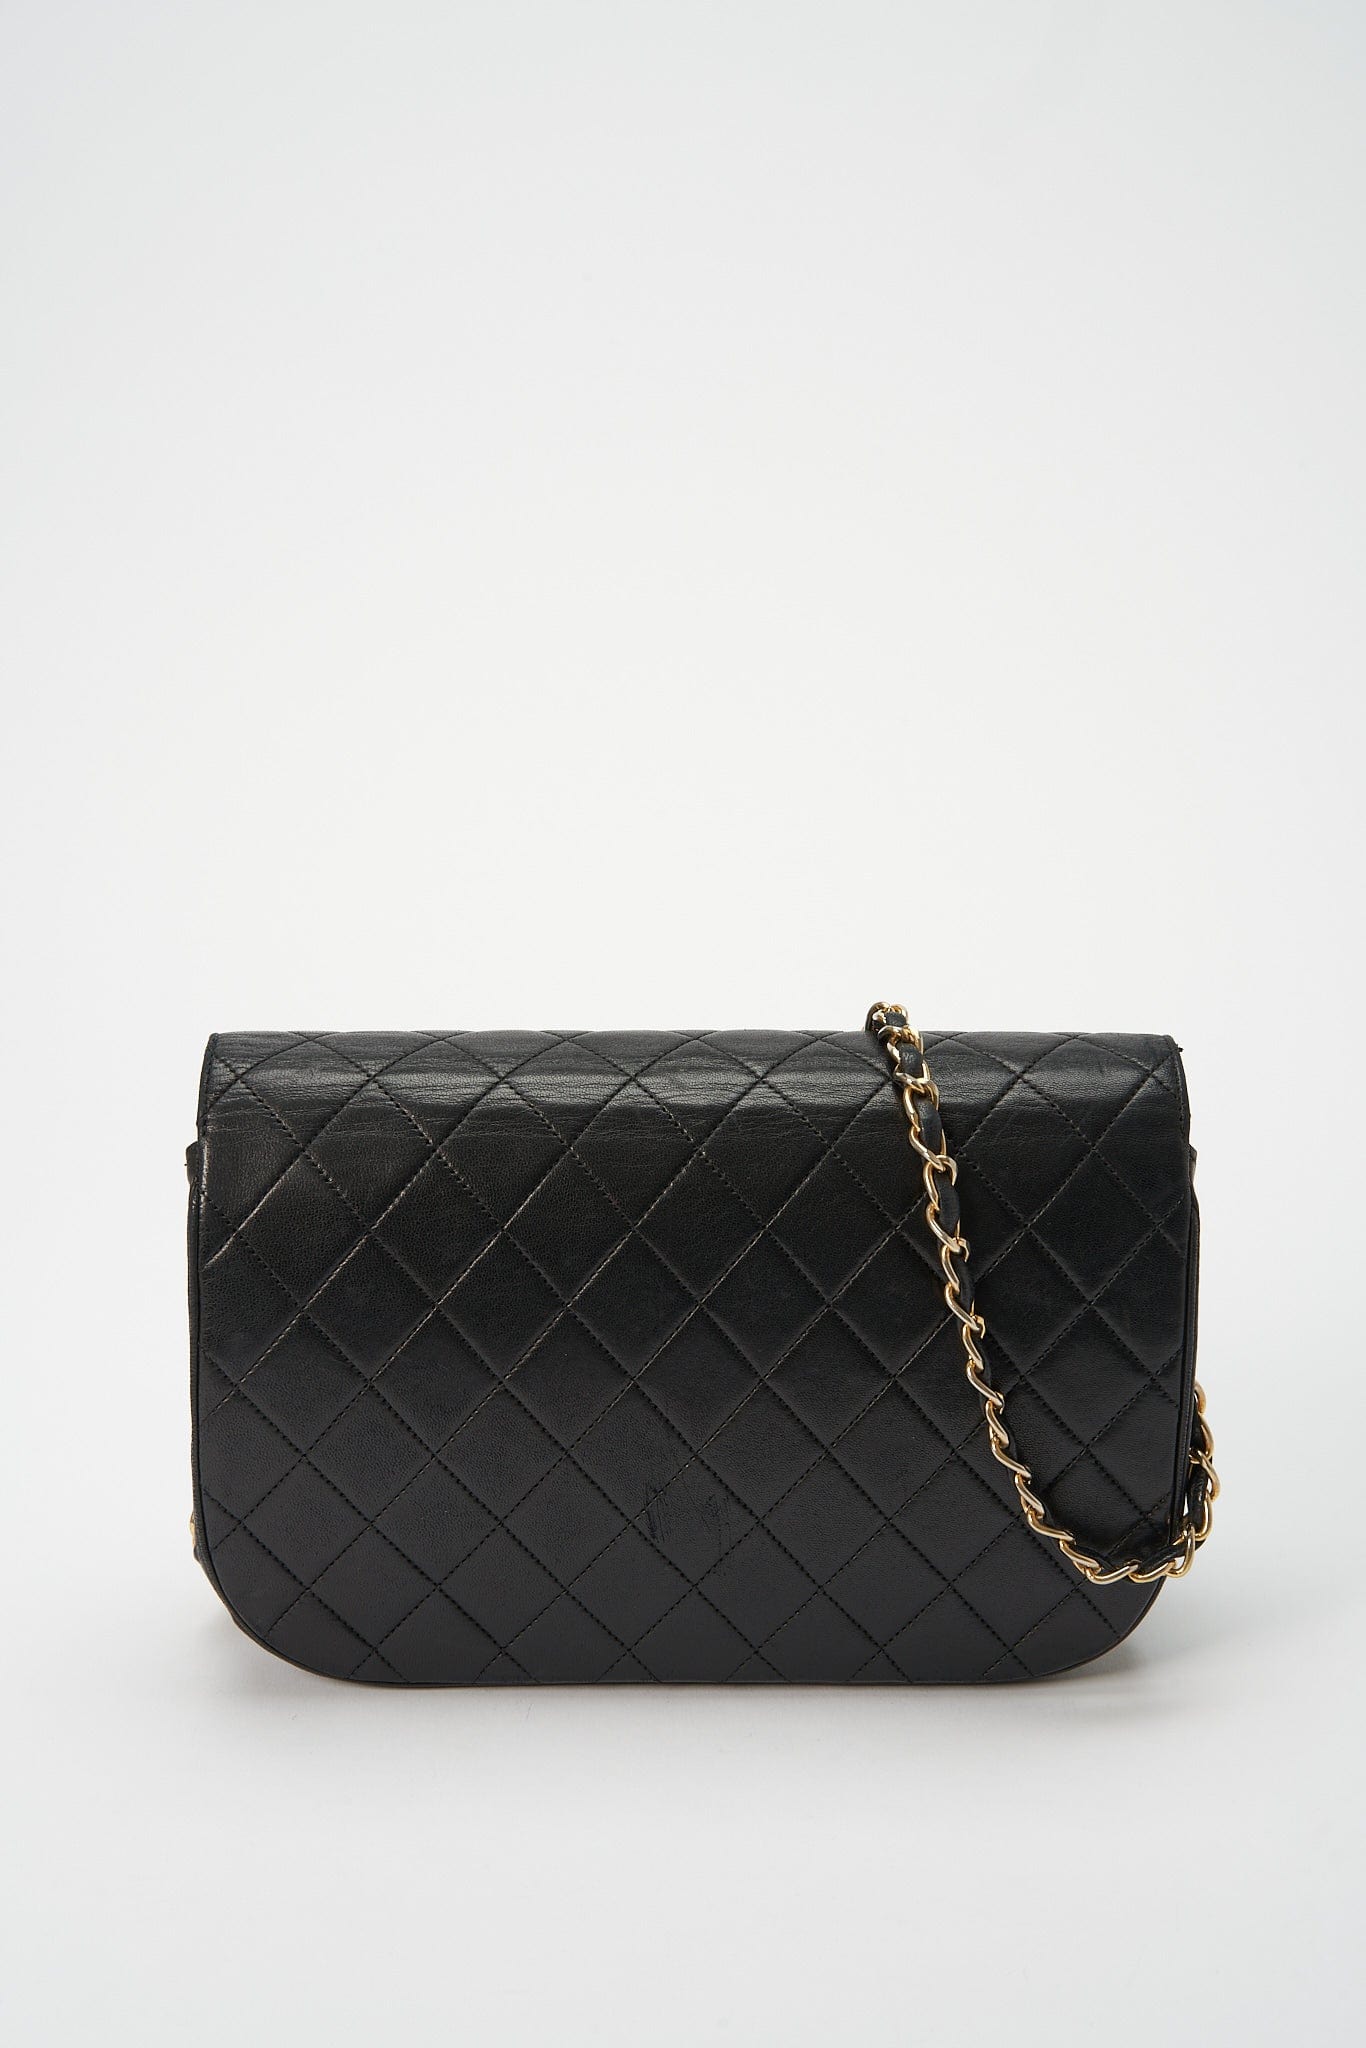 CHANEL, Bags, Chanel Vintage Bag 971980s